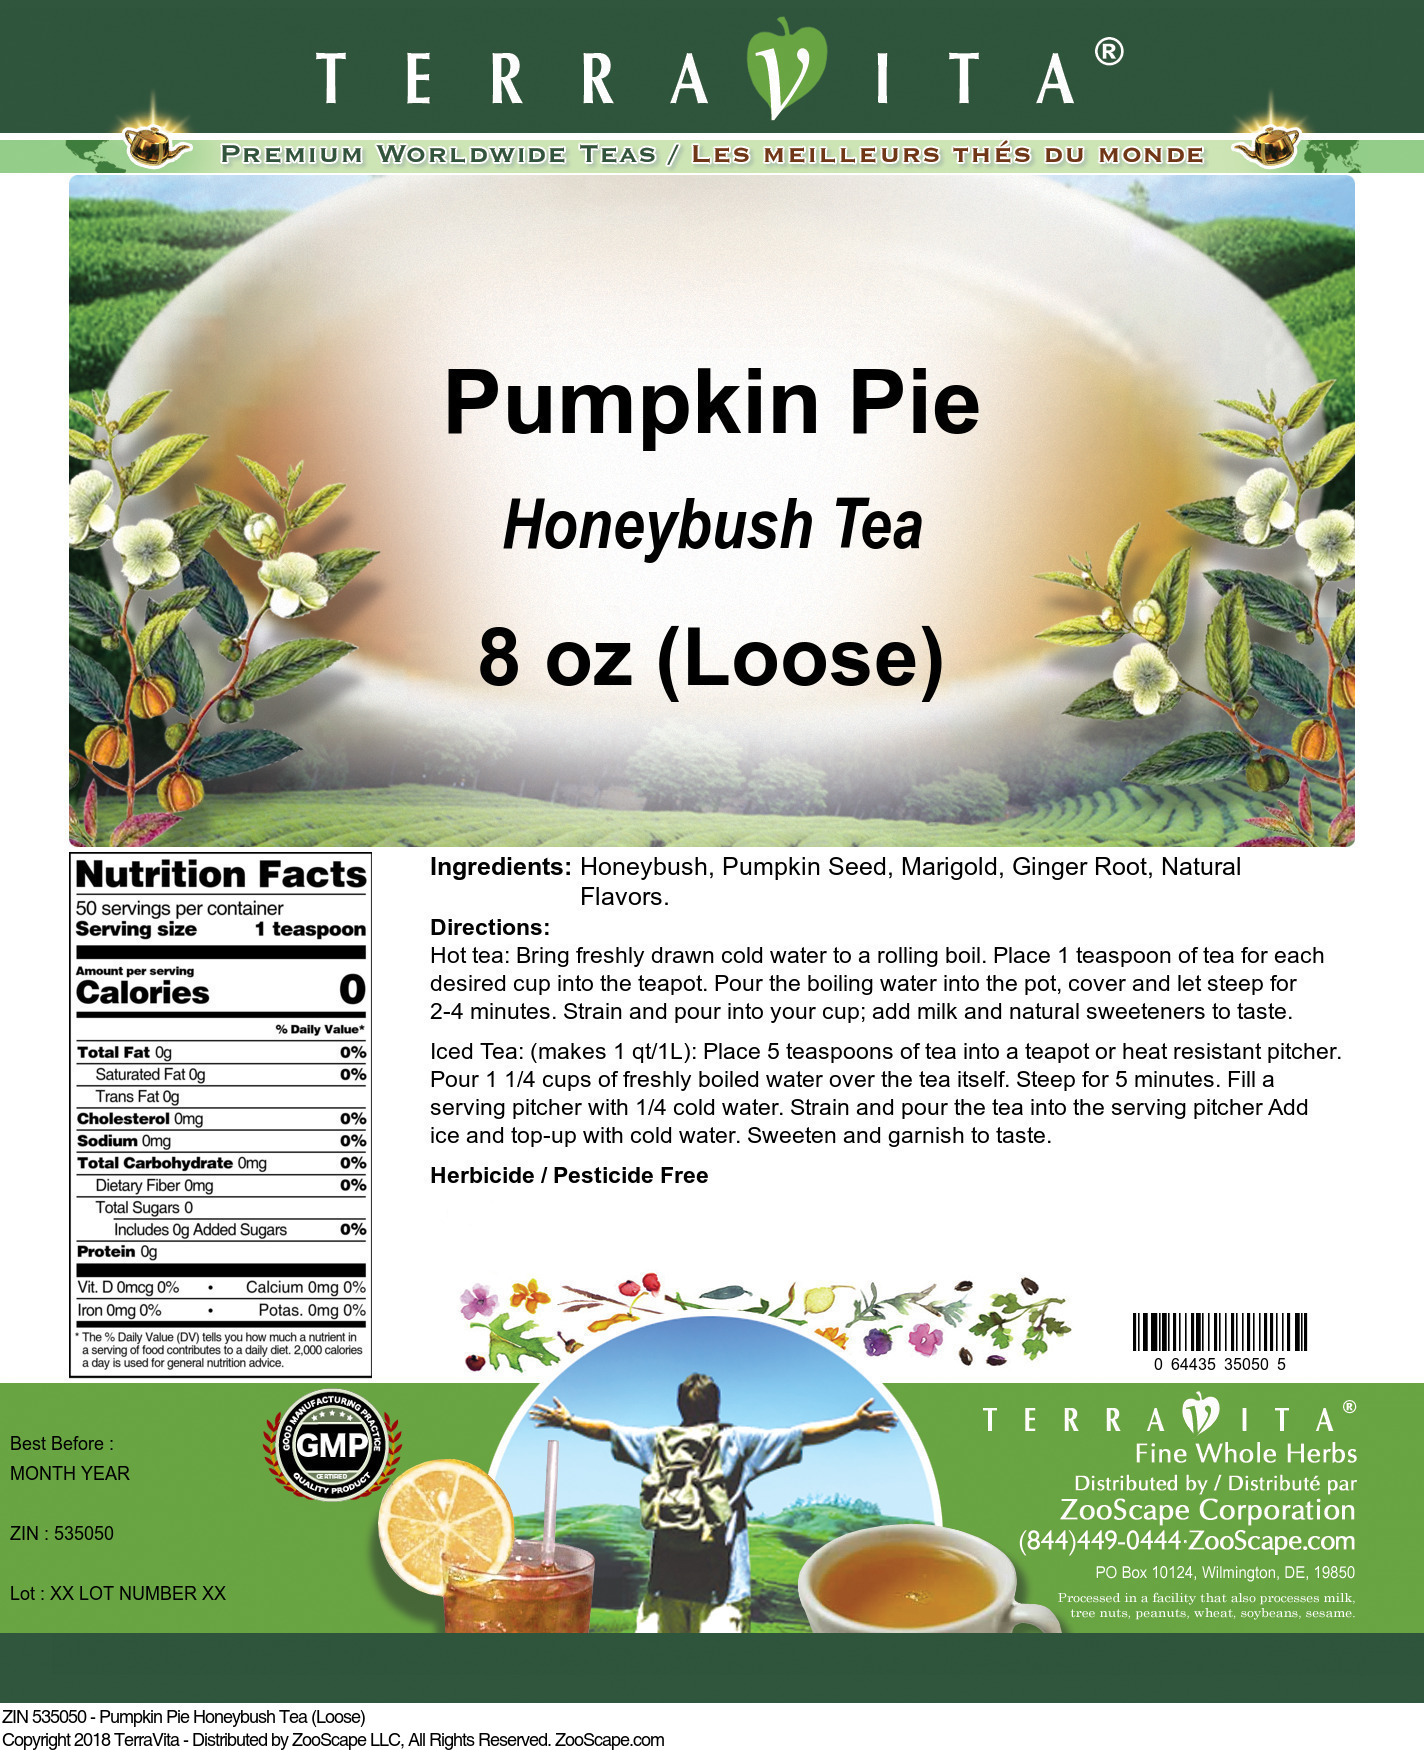 Pumpkin Pie Honeybush Tea (Loose) - Label